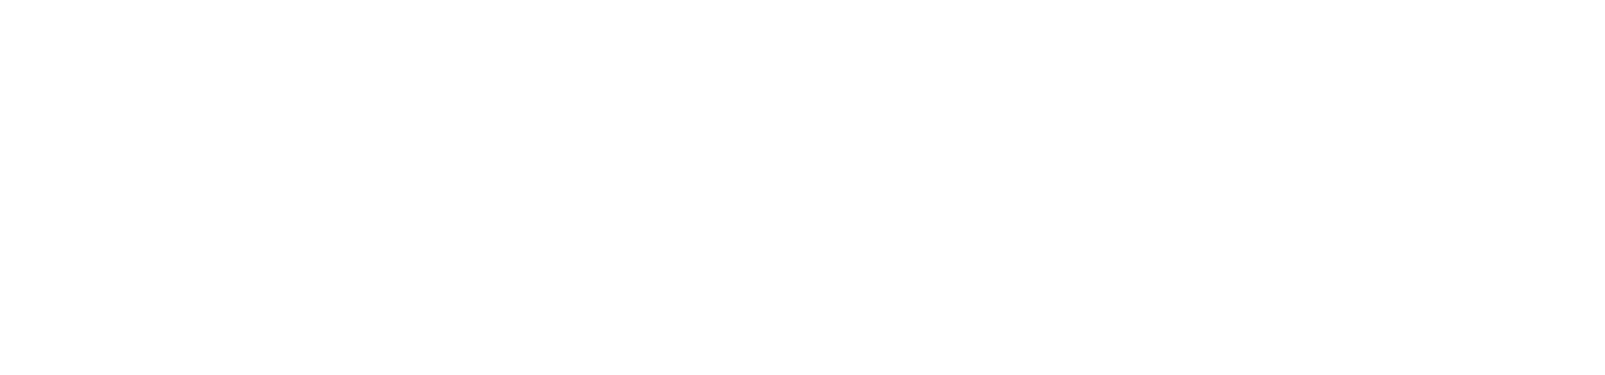 Capstone Green Energy logo grand pour les fonds sombres (PNG transparent)